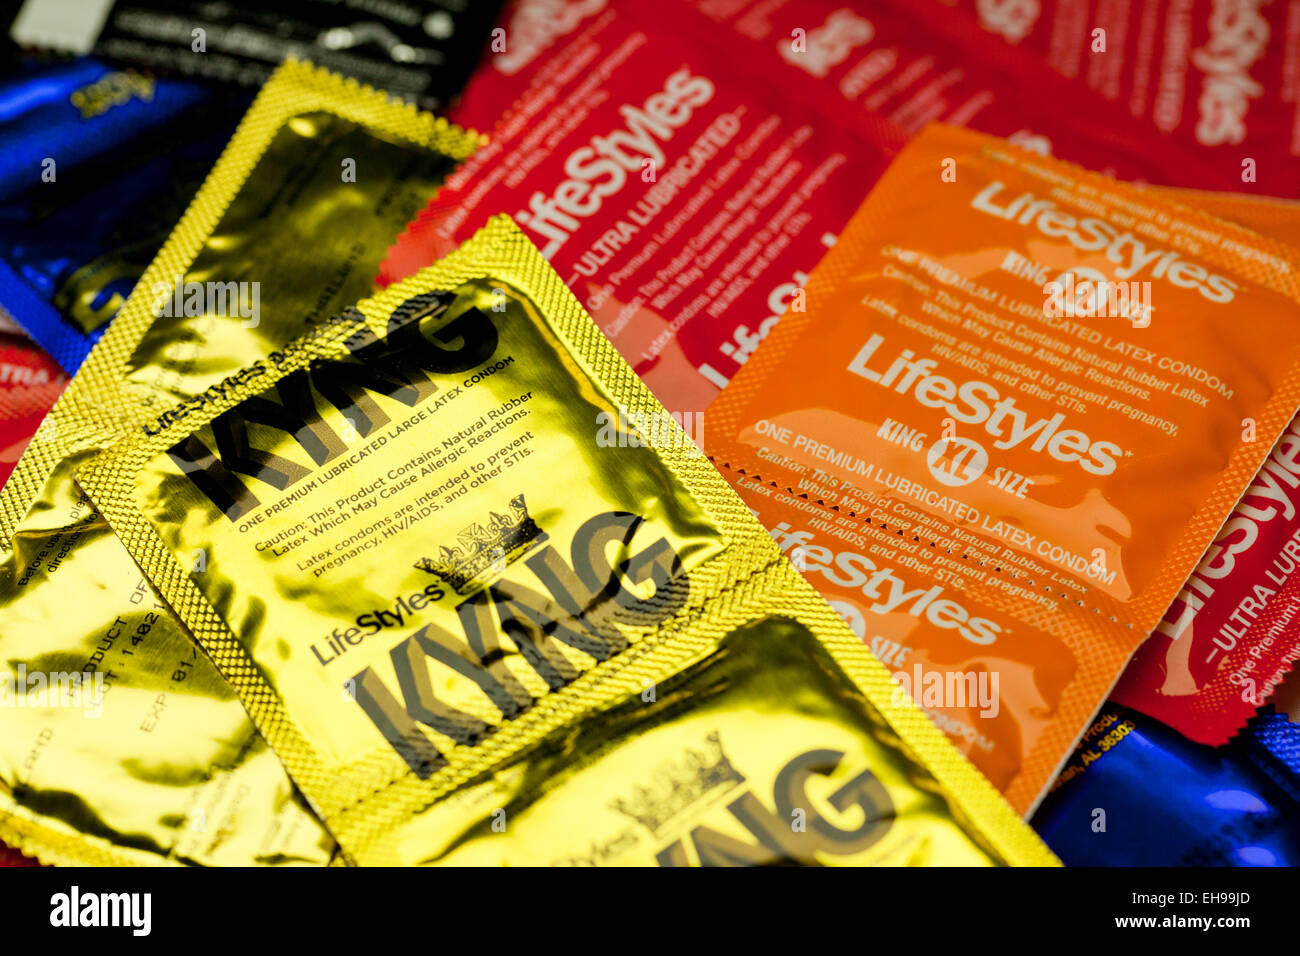 Varie marche di preservativi - USA Foto stock - Alamy